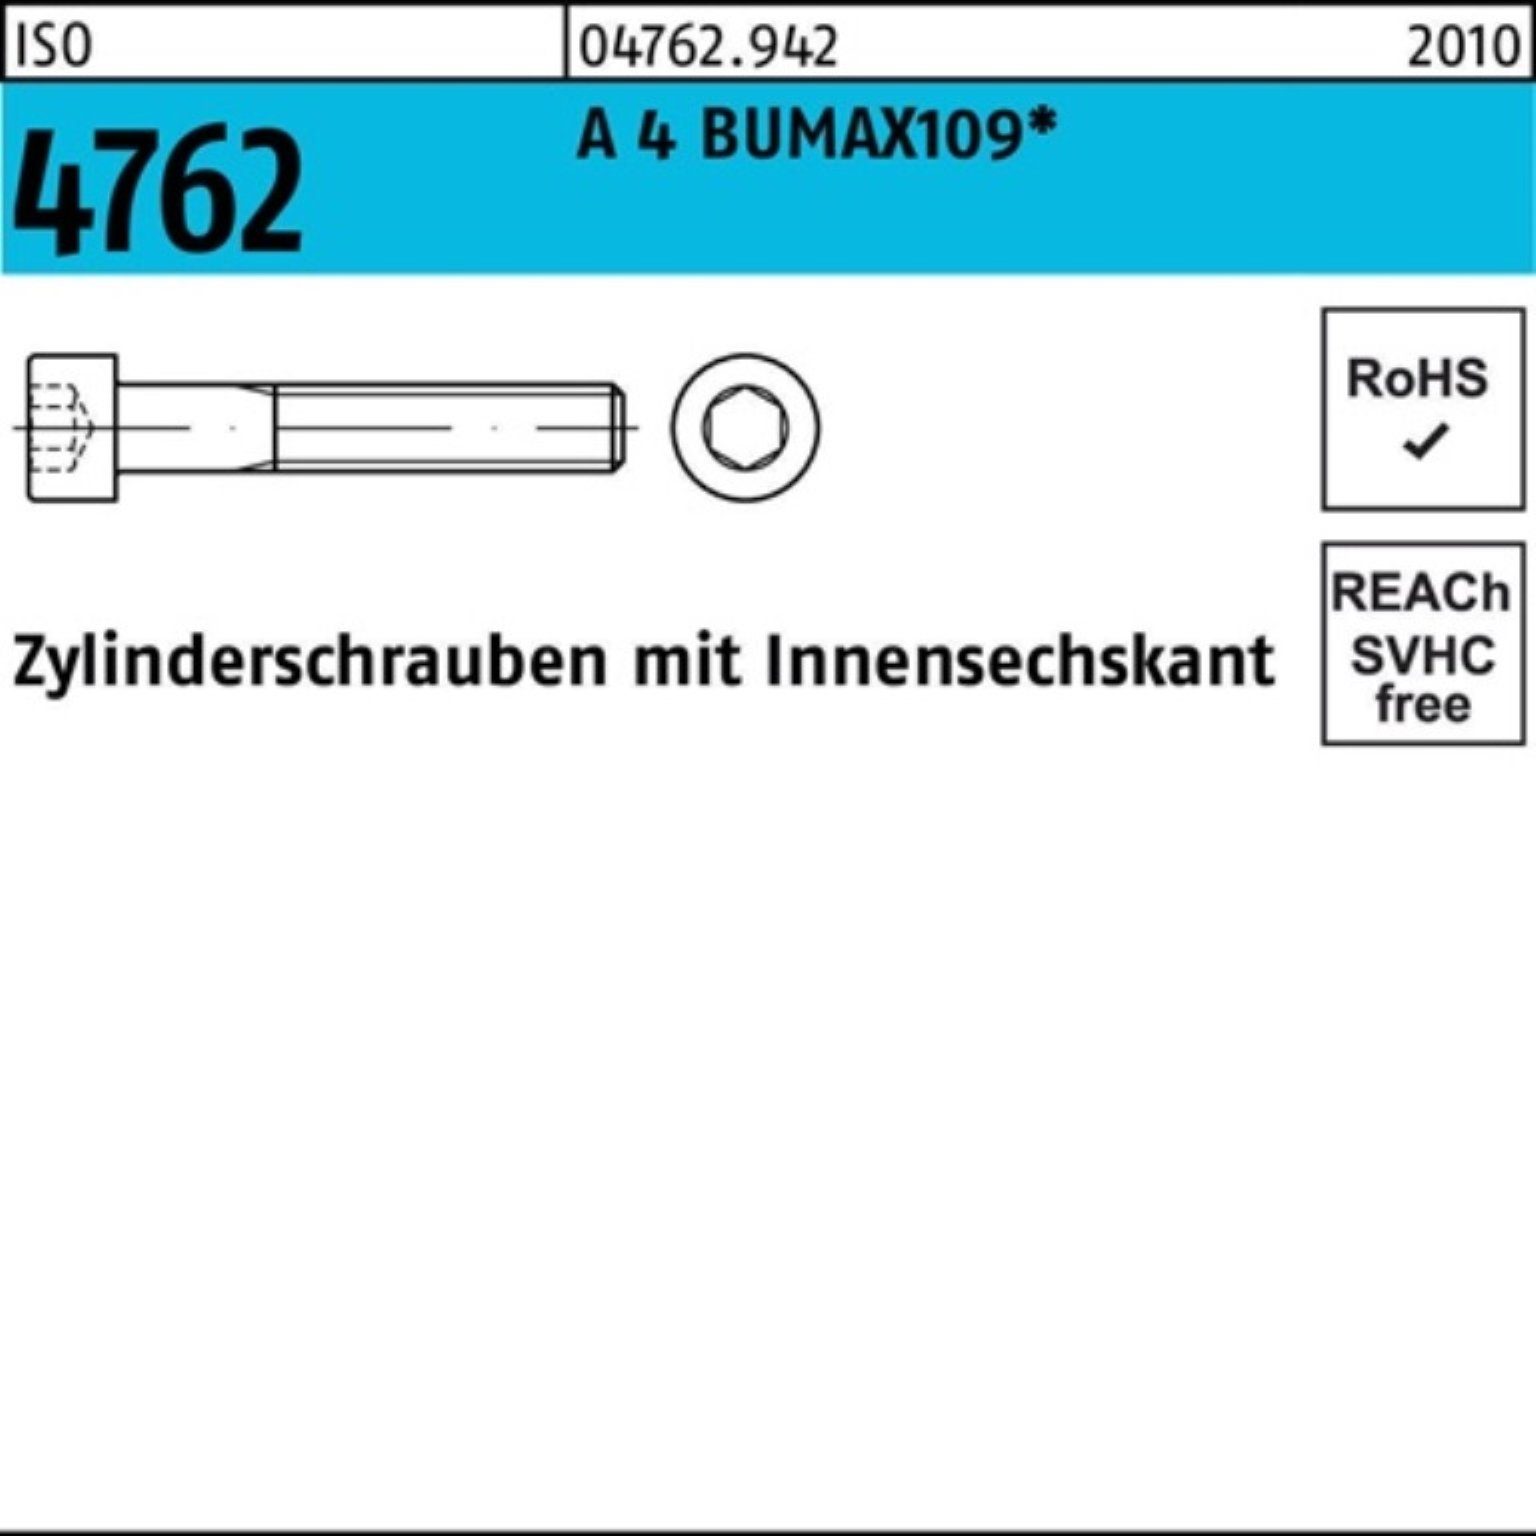 Bufab Zylinderschraube 100 A Innen-6kt ISO 100er 4 M6x BUMAX109 Zylinderschraube 4762 40 Pack